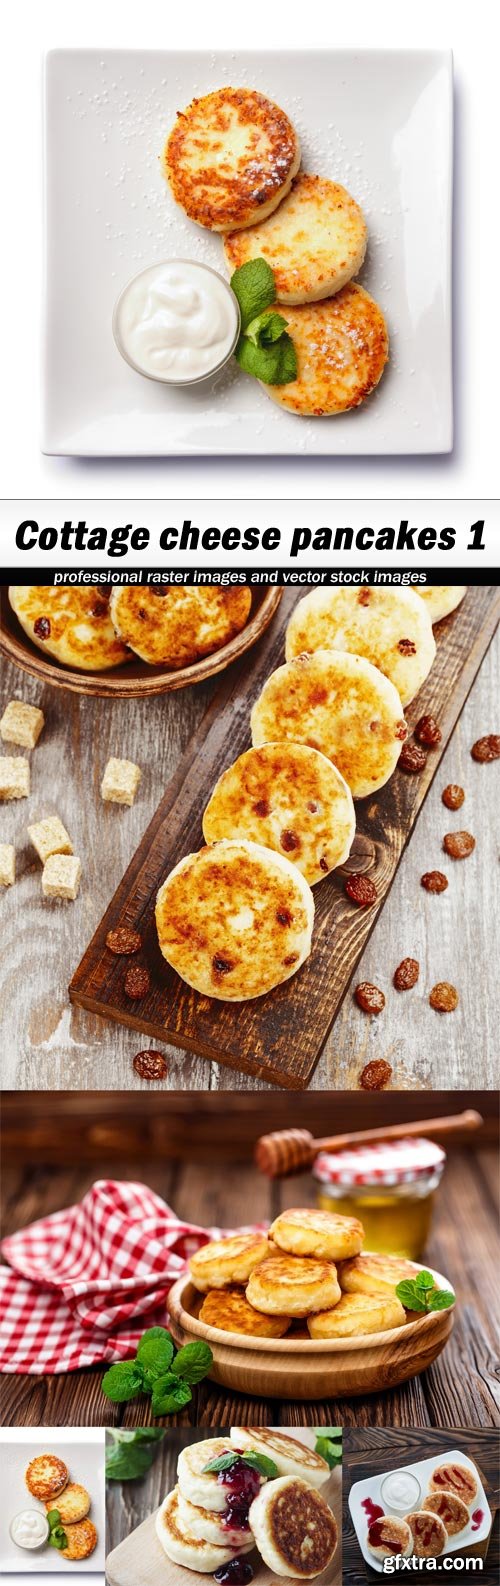 Cottage cheese pancakes 1 - 5 UHQ JPEG